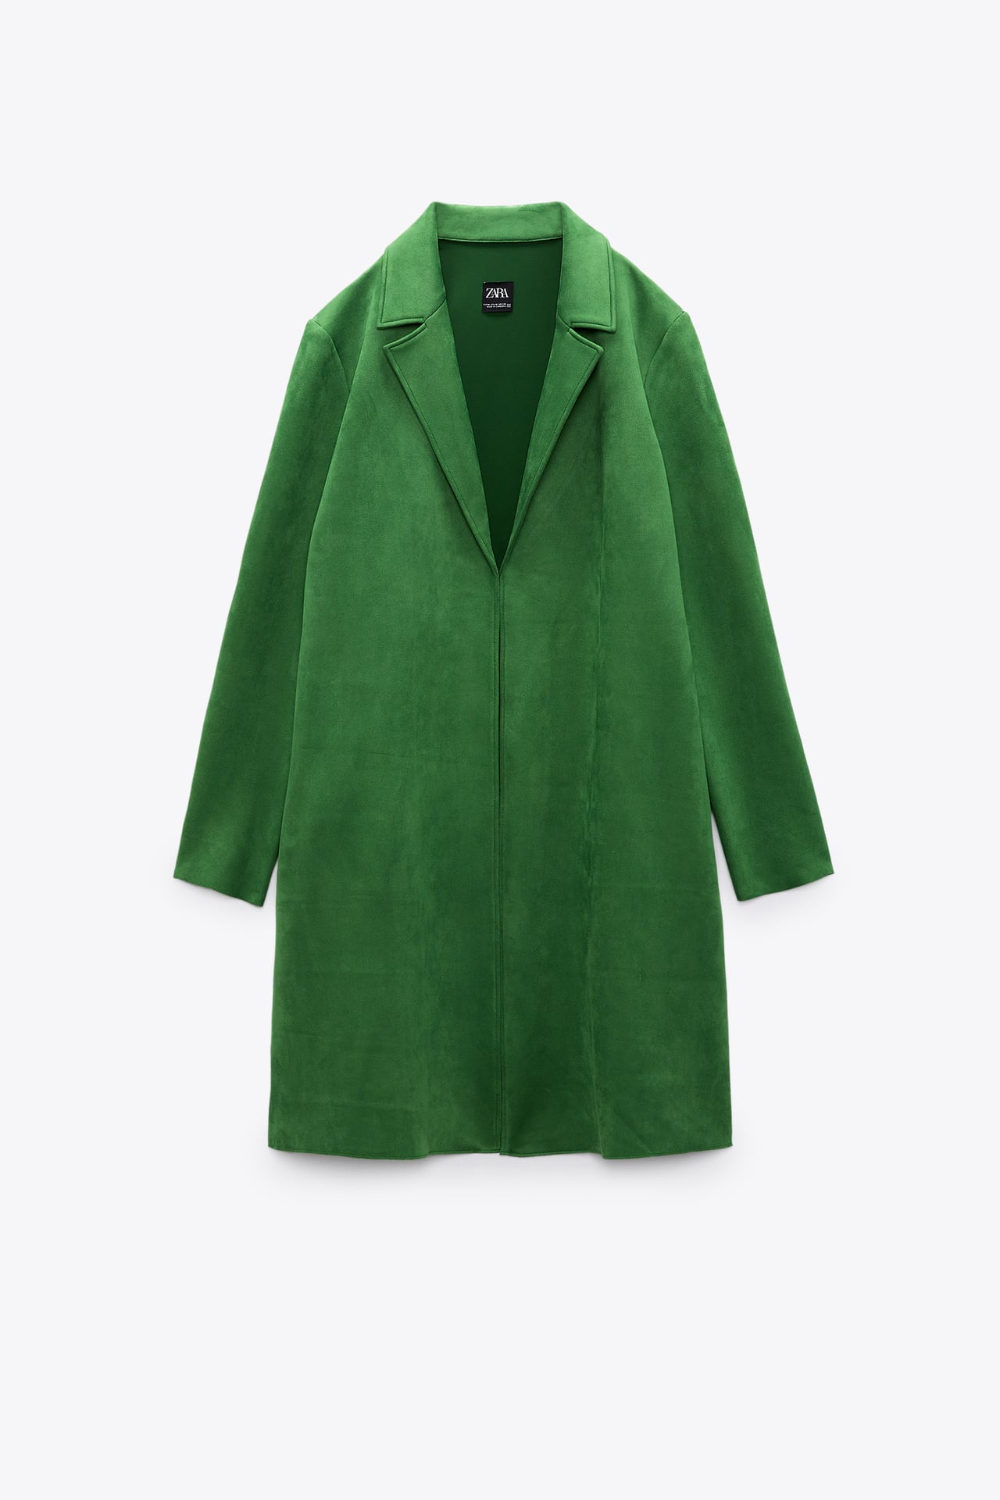 https://flyfiercefab.com/wp-content/uploads/2022/03/Zara-green-faux-suede-coat.png